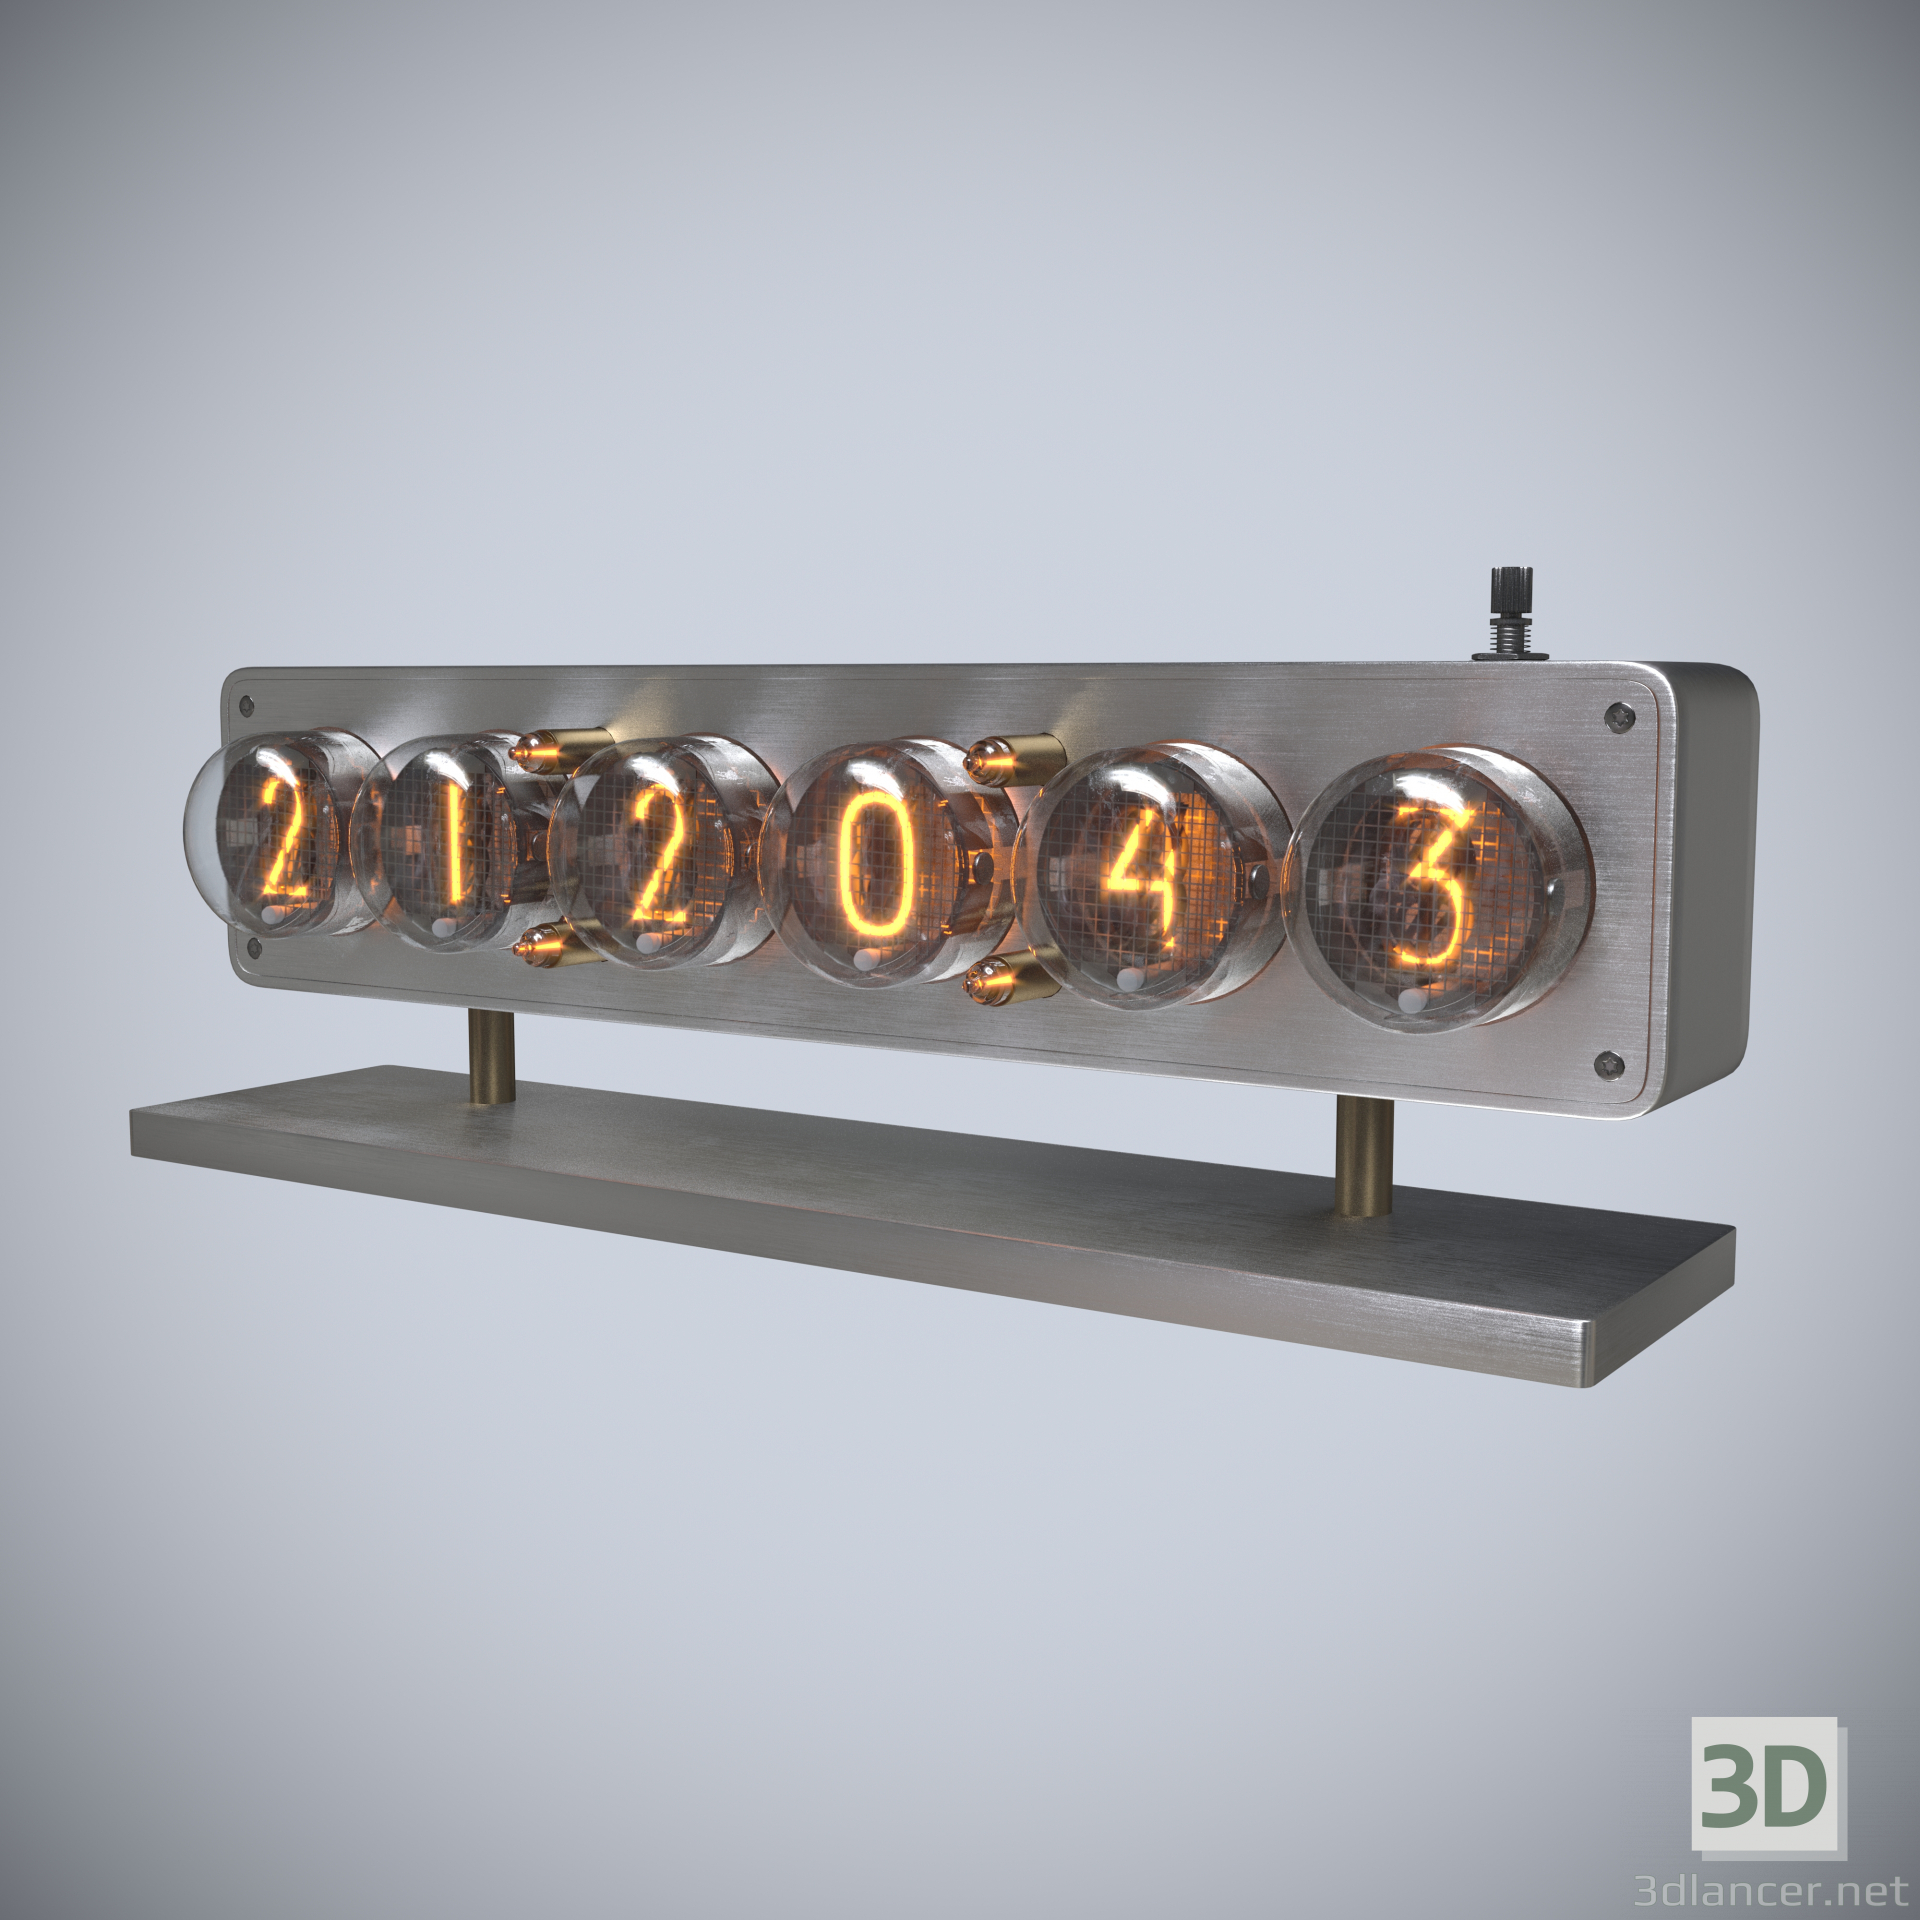 3d Часы на лампах ИН-4.IN4 Glow Tube Nixie Electron Tube Clock модель купить - ракурс